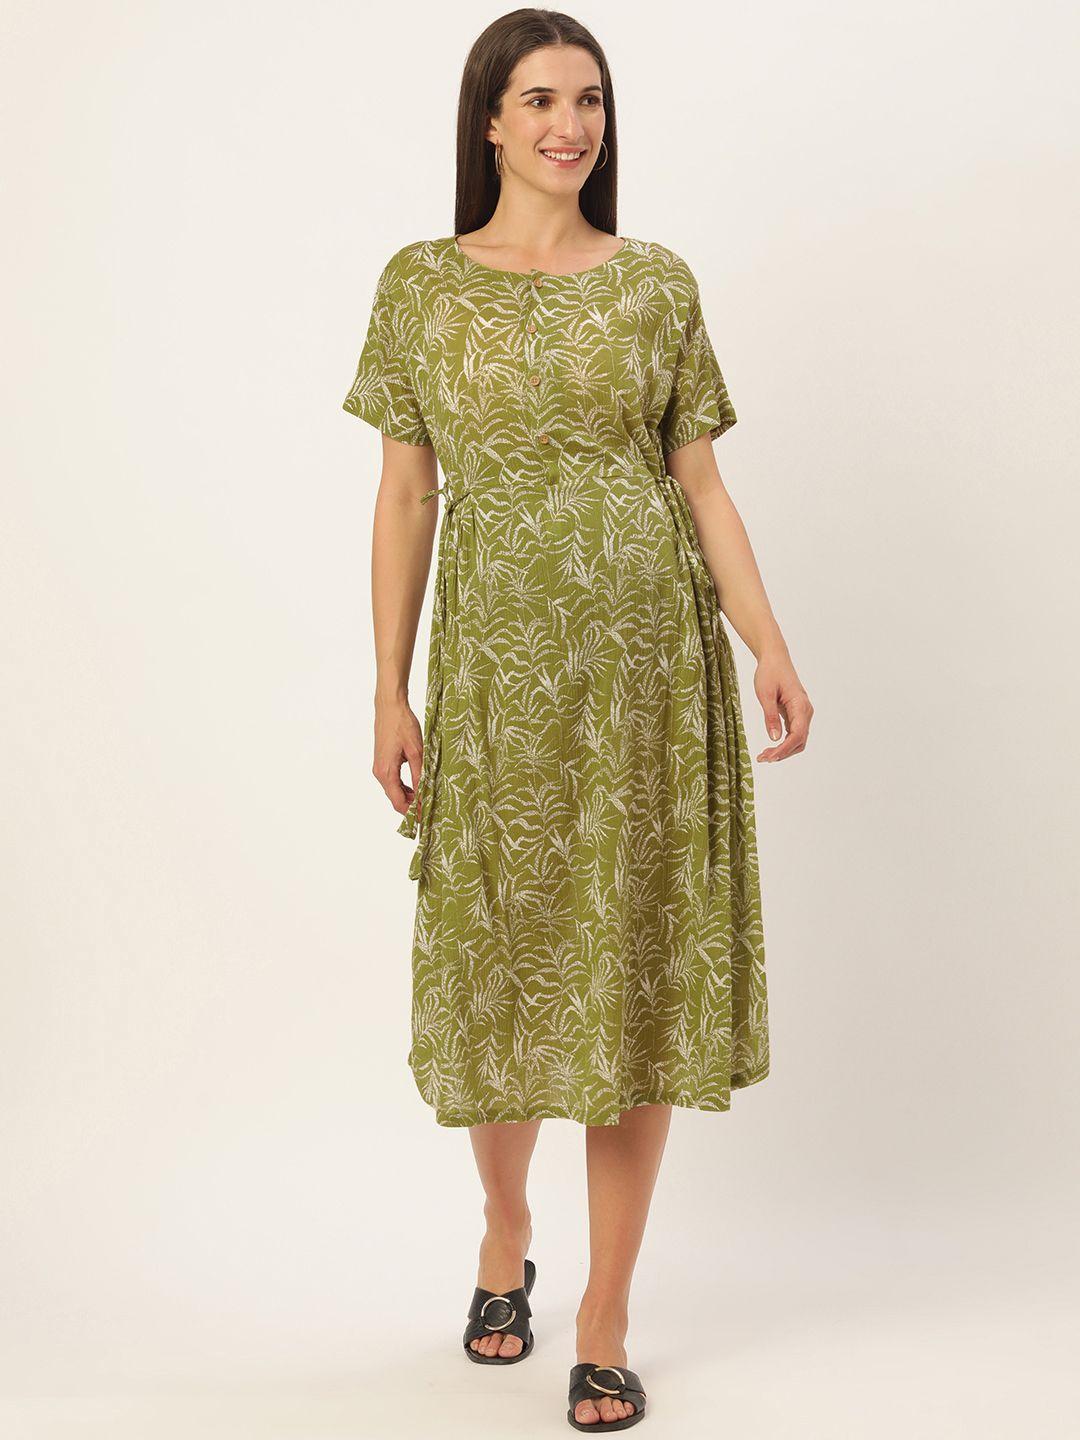 nejo olive green & beige tropical maternity a-line dress